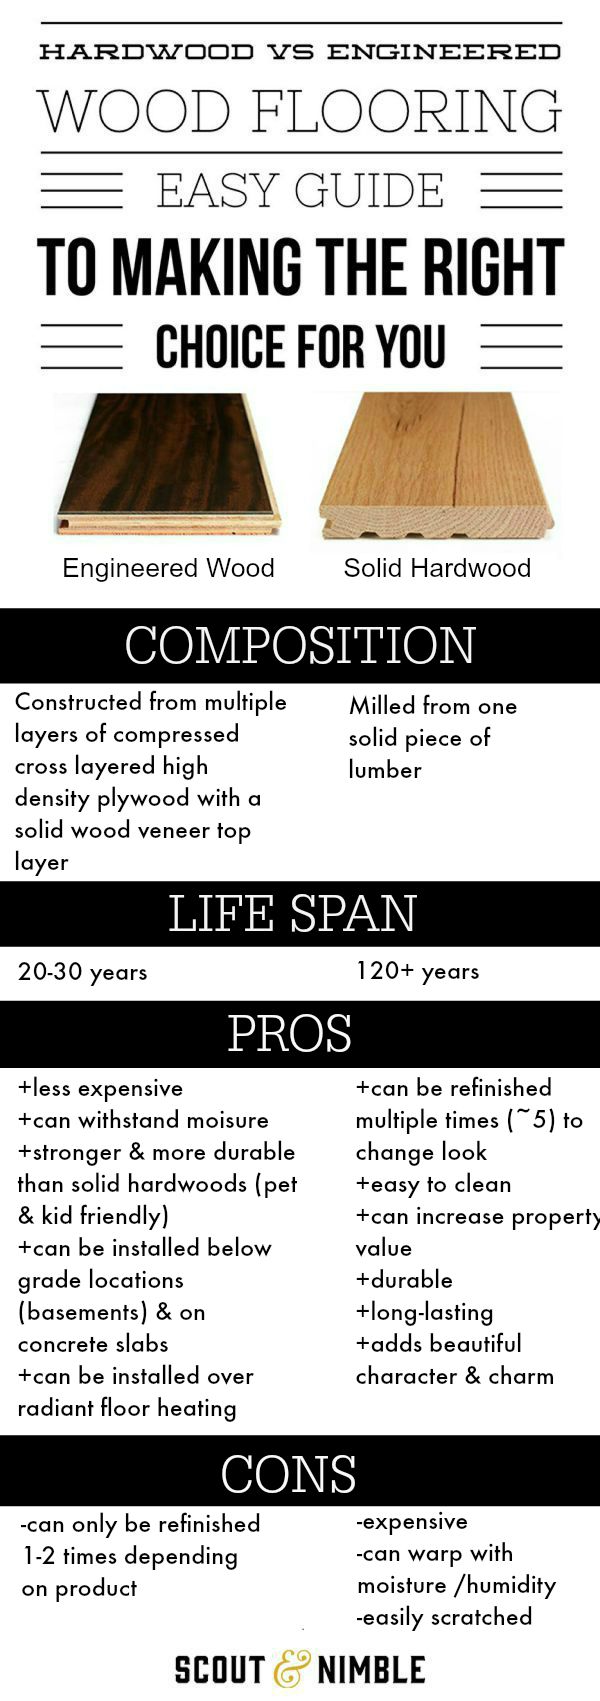 Engineered Vs Solid Hardwood Floors, Which Is Better Hardwood Or Engineered